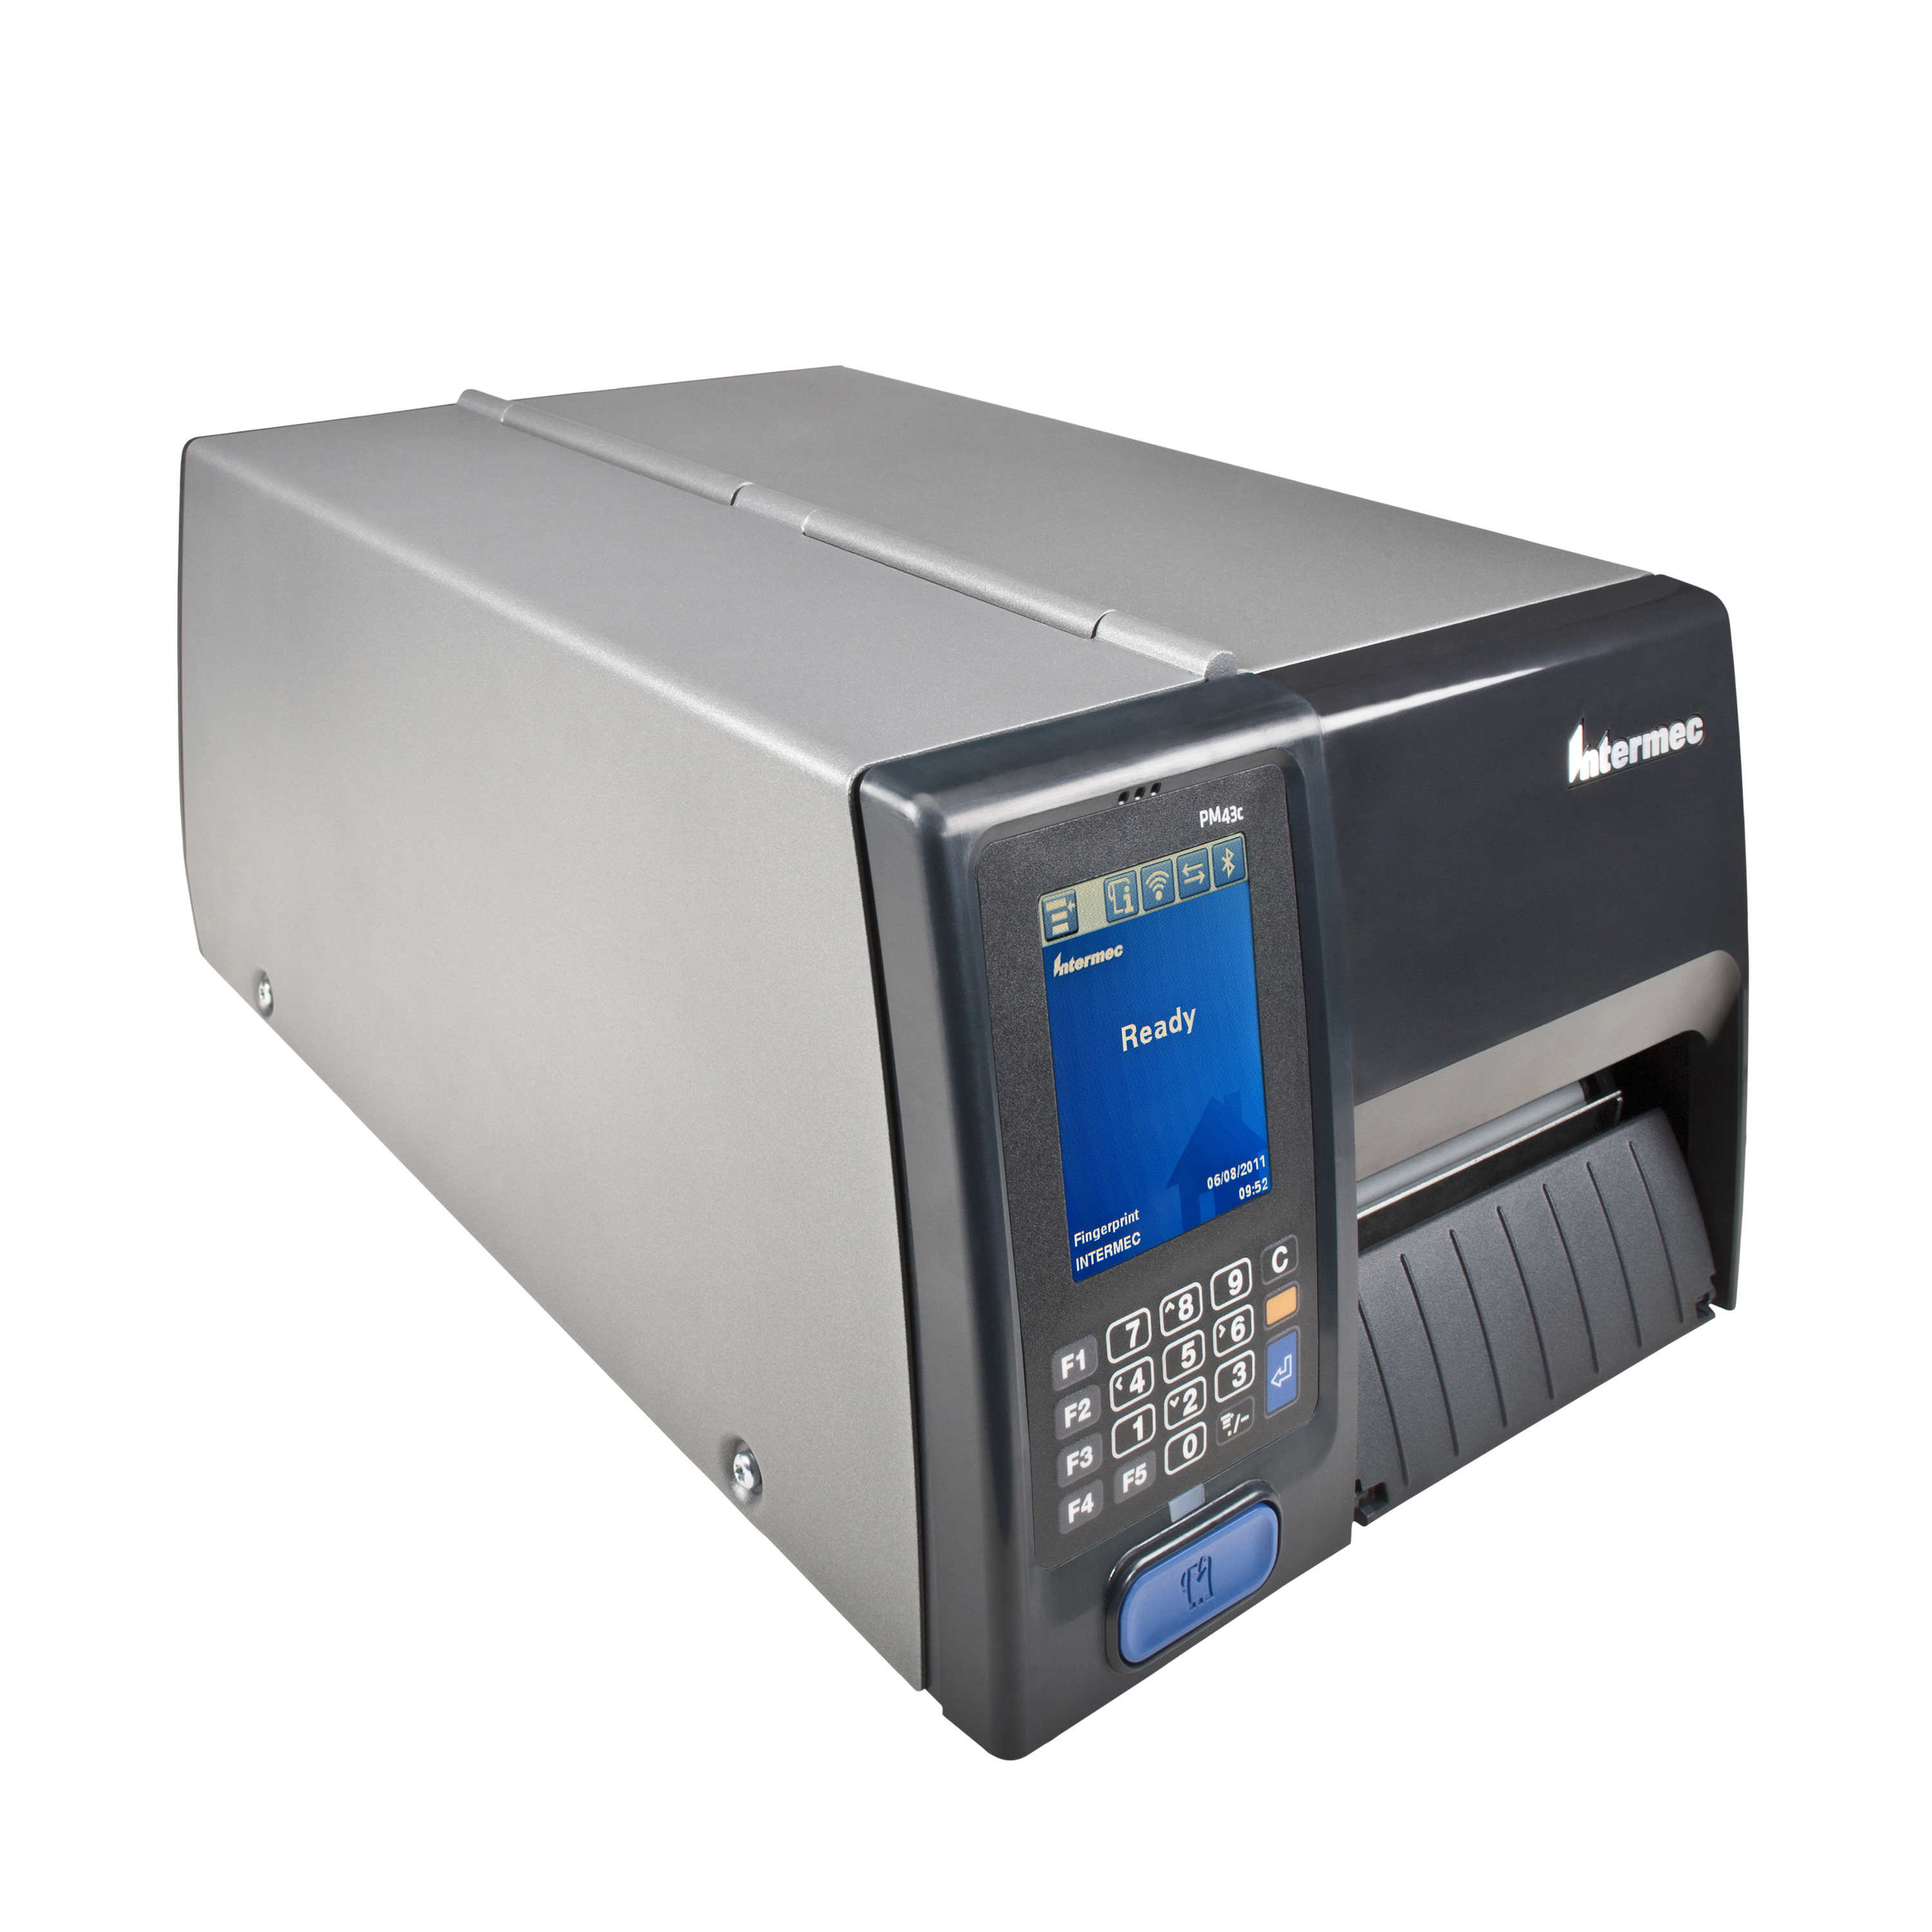 Intermec PM43/PM43c Mid-Range Printer in Moana